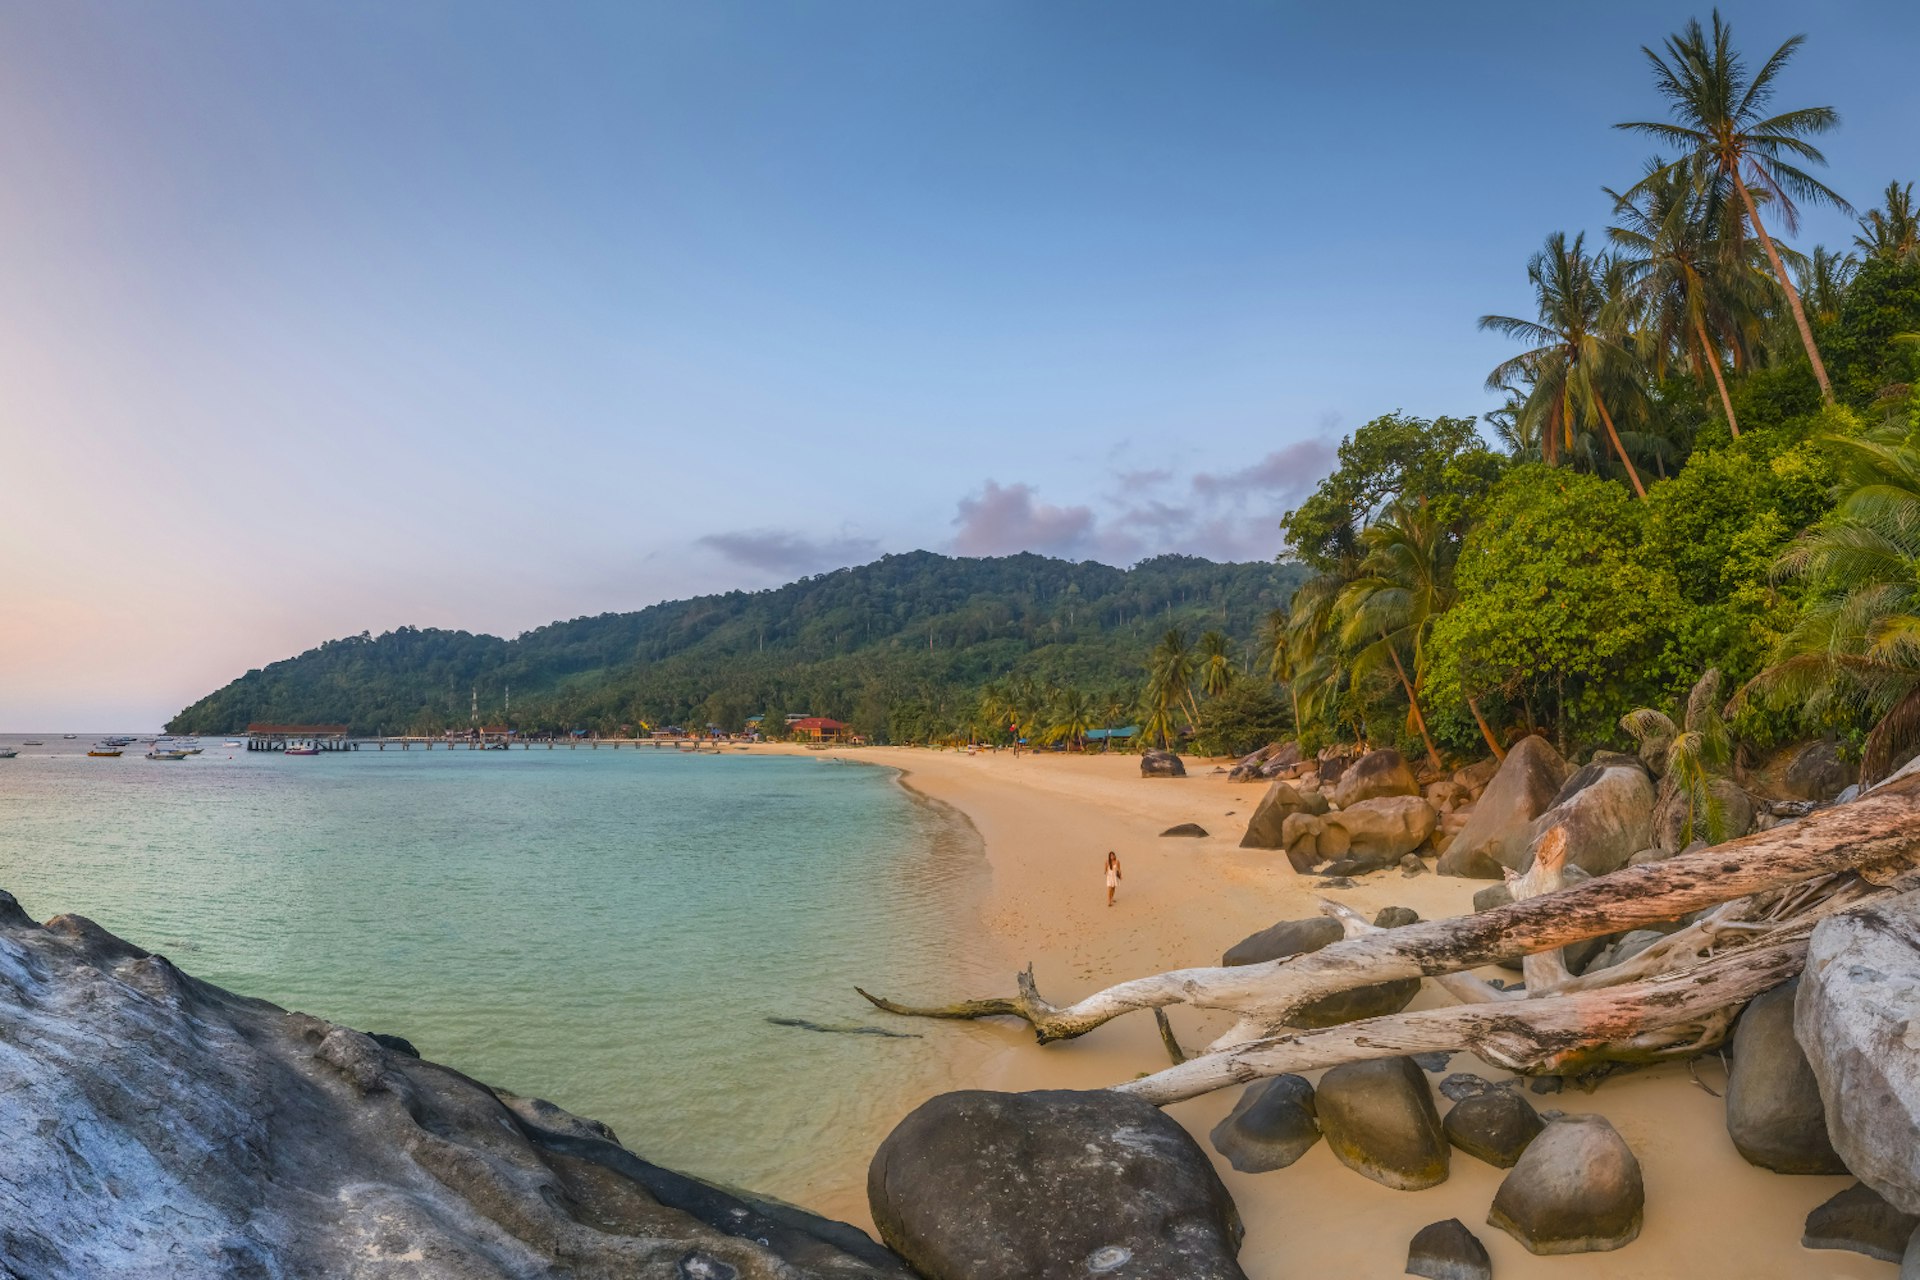 Tioman's Salang Beach is among the island's most beautiful